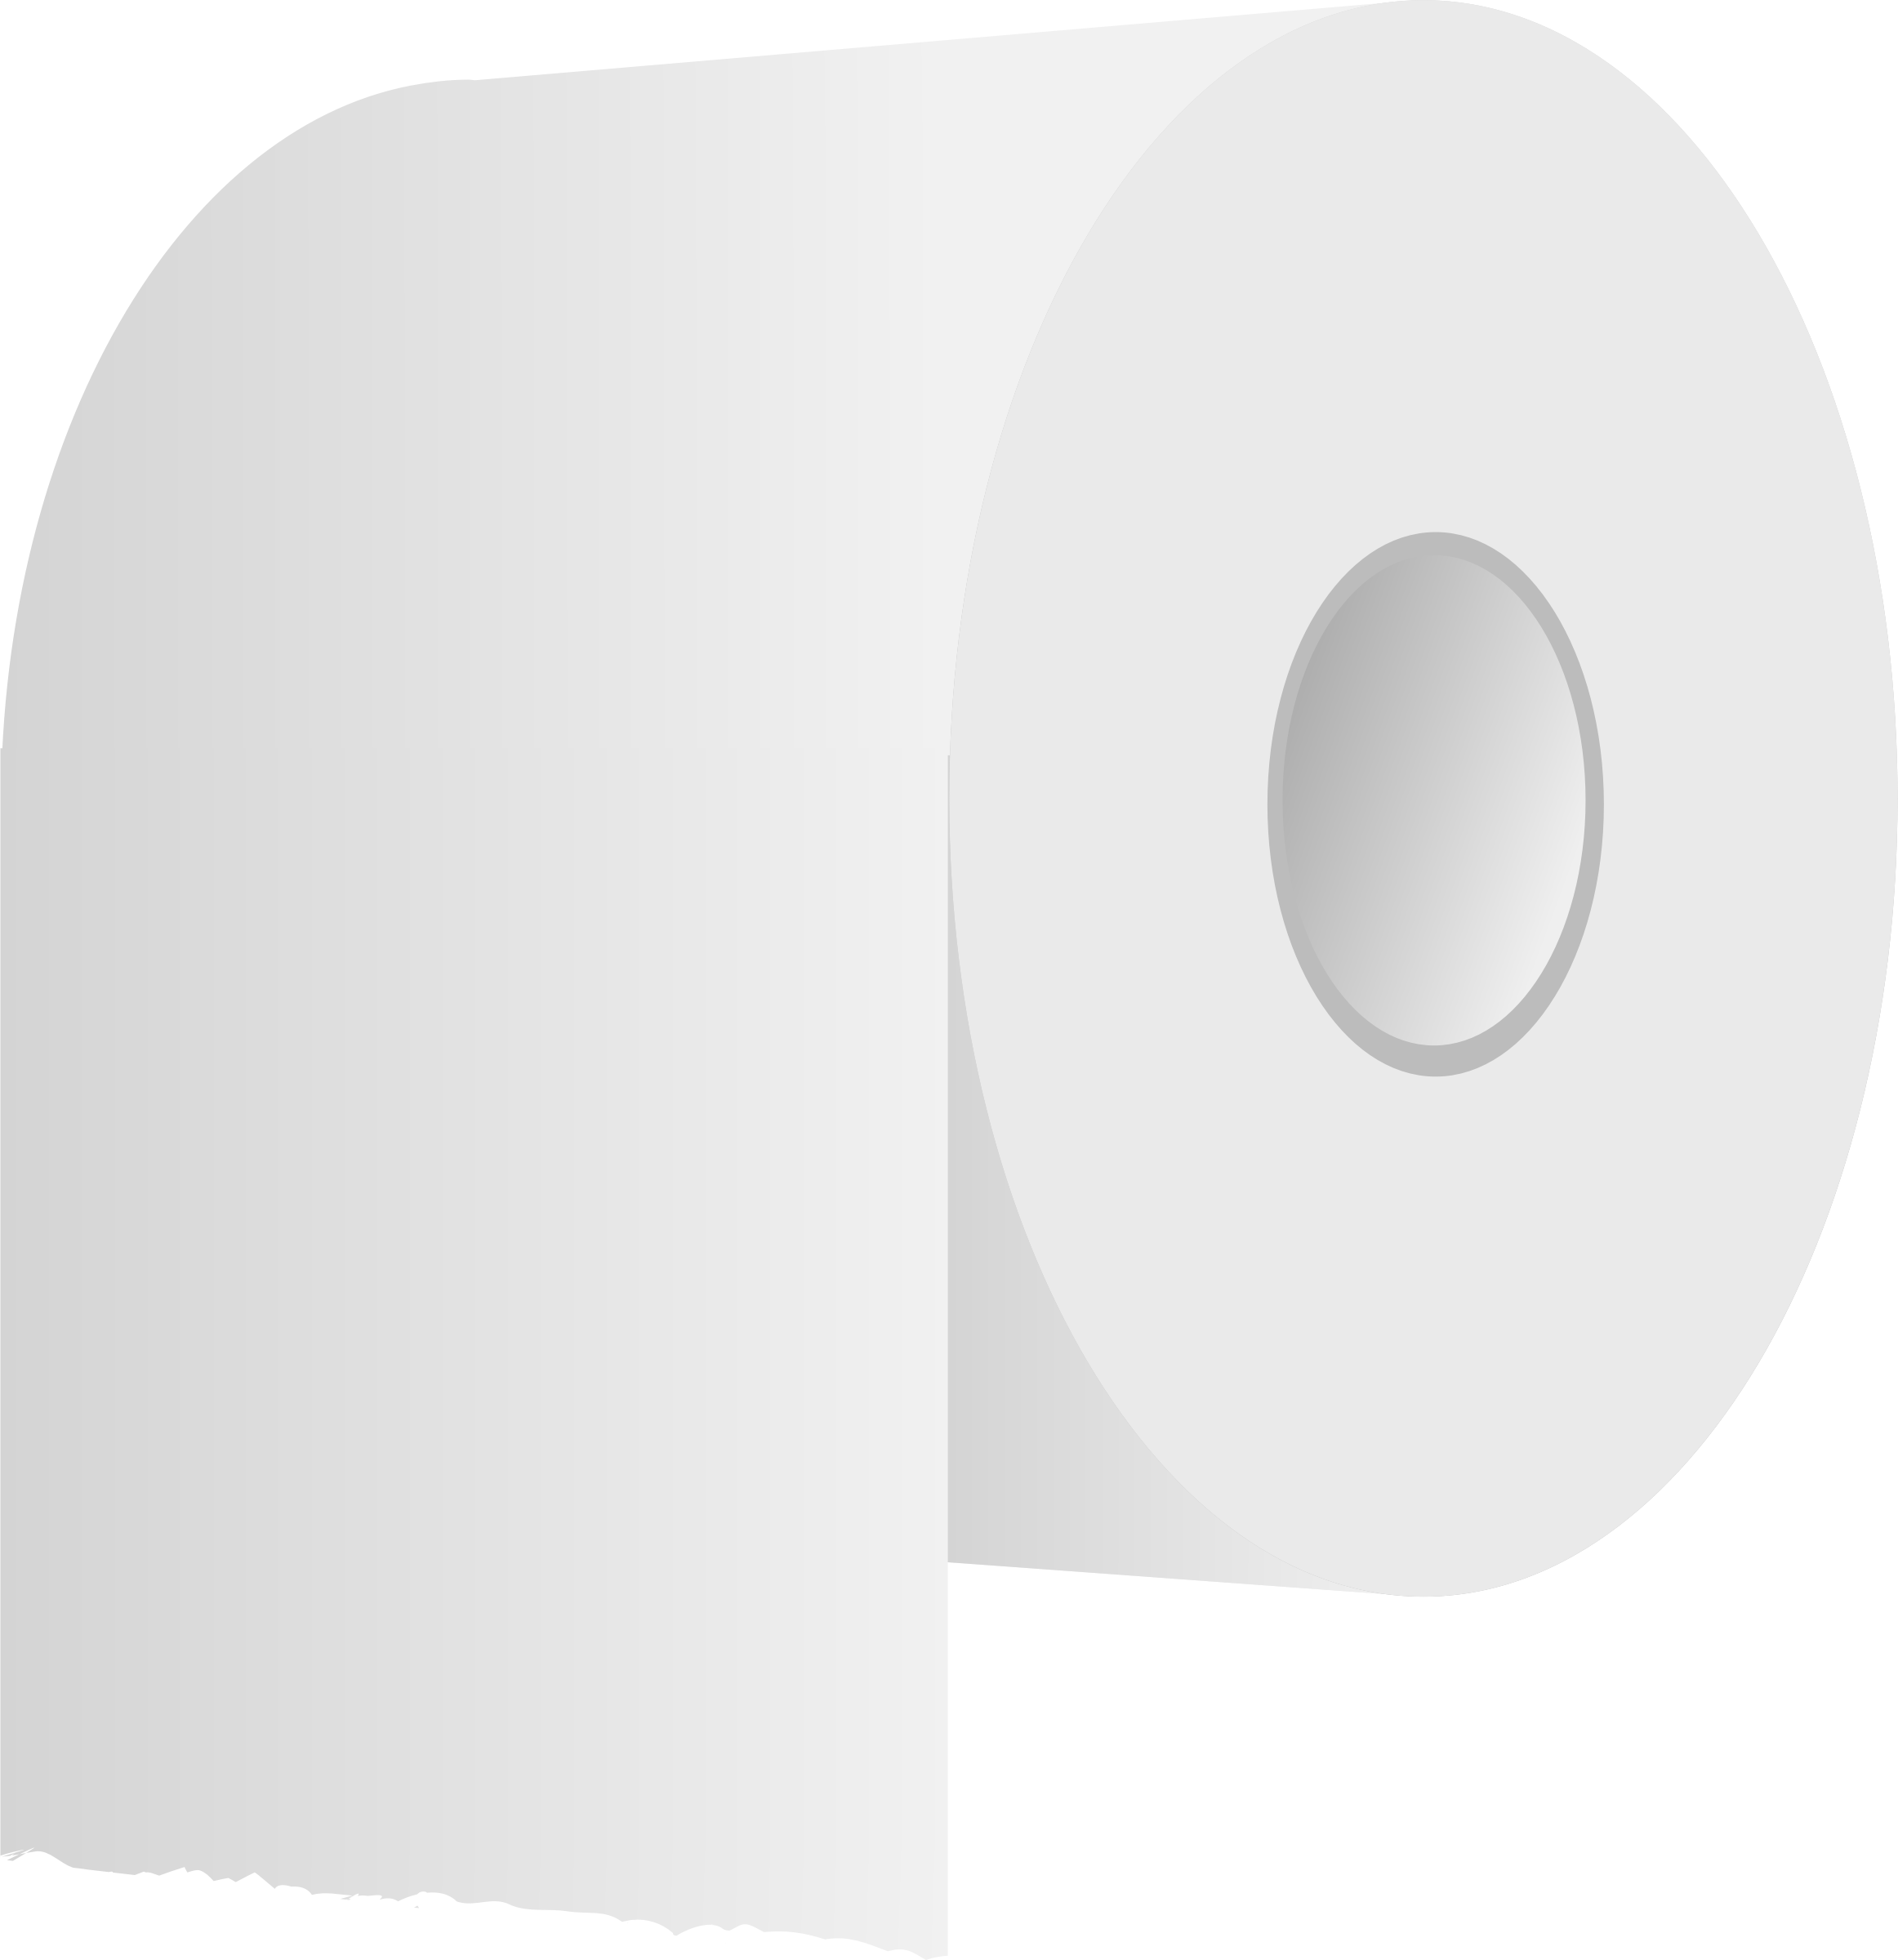 Big Image (Png) - Toilet Paper, Transparent background PNG HD thumbnail